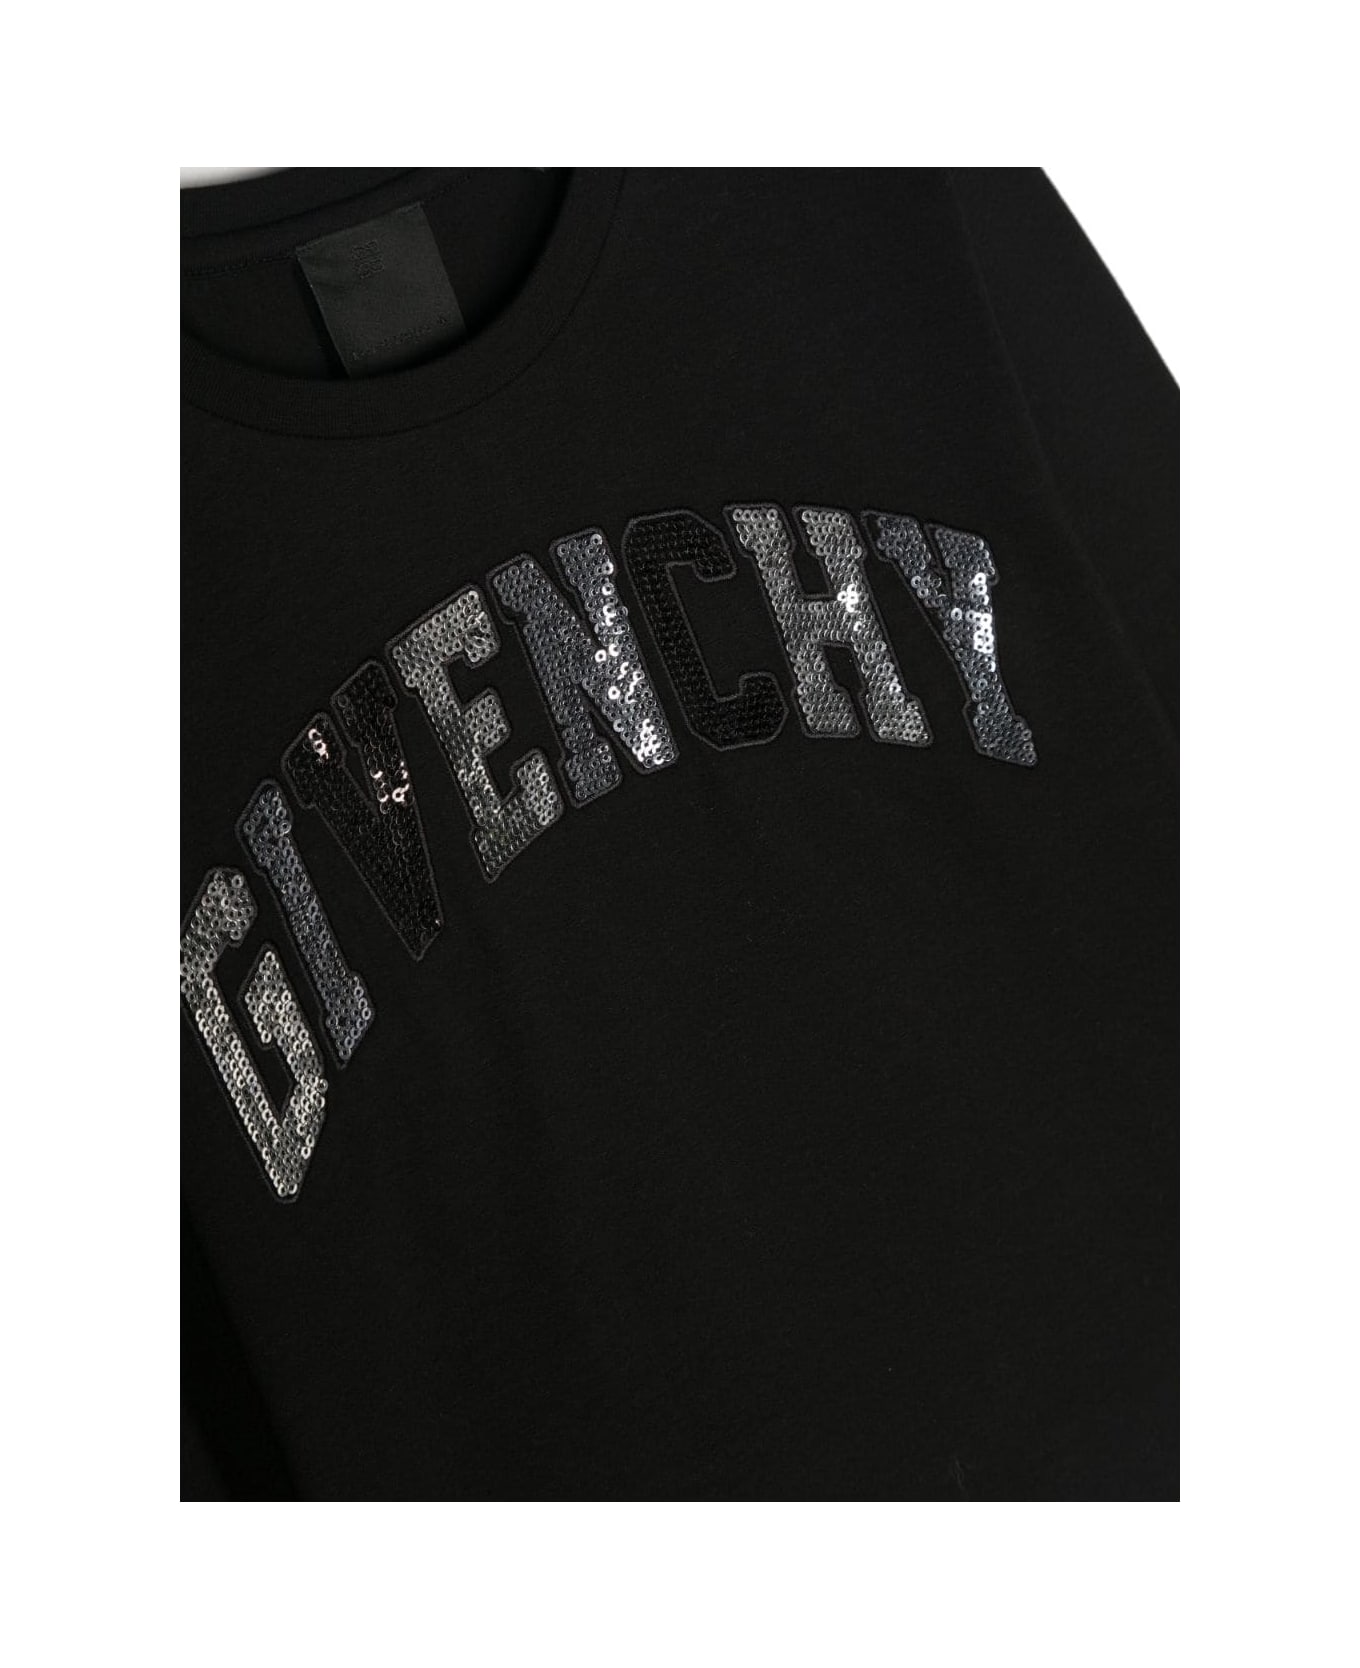 Givenchy T-shirt Nera In Jersey Di Cotone Bambina - Nero